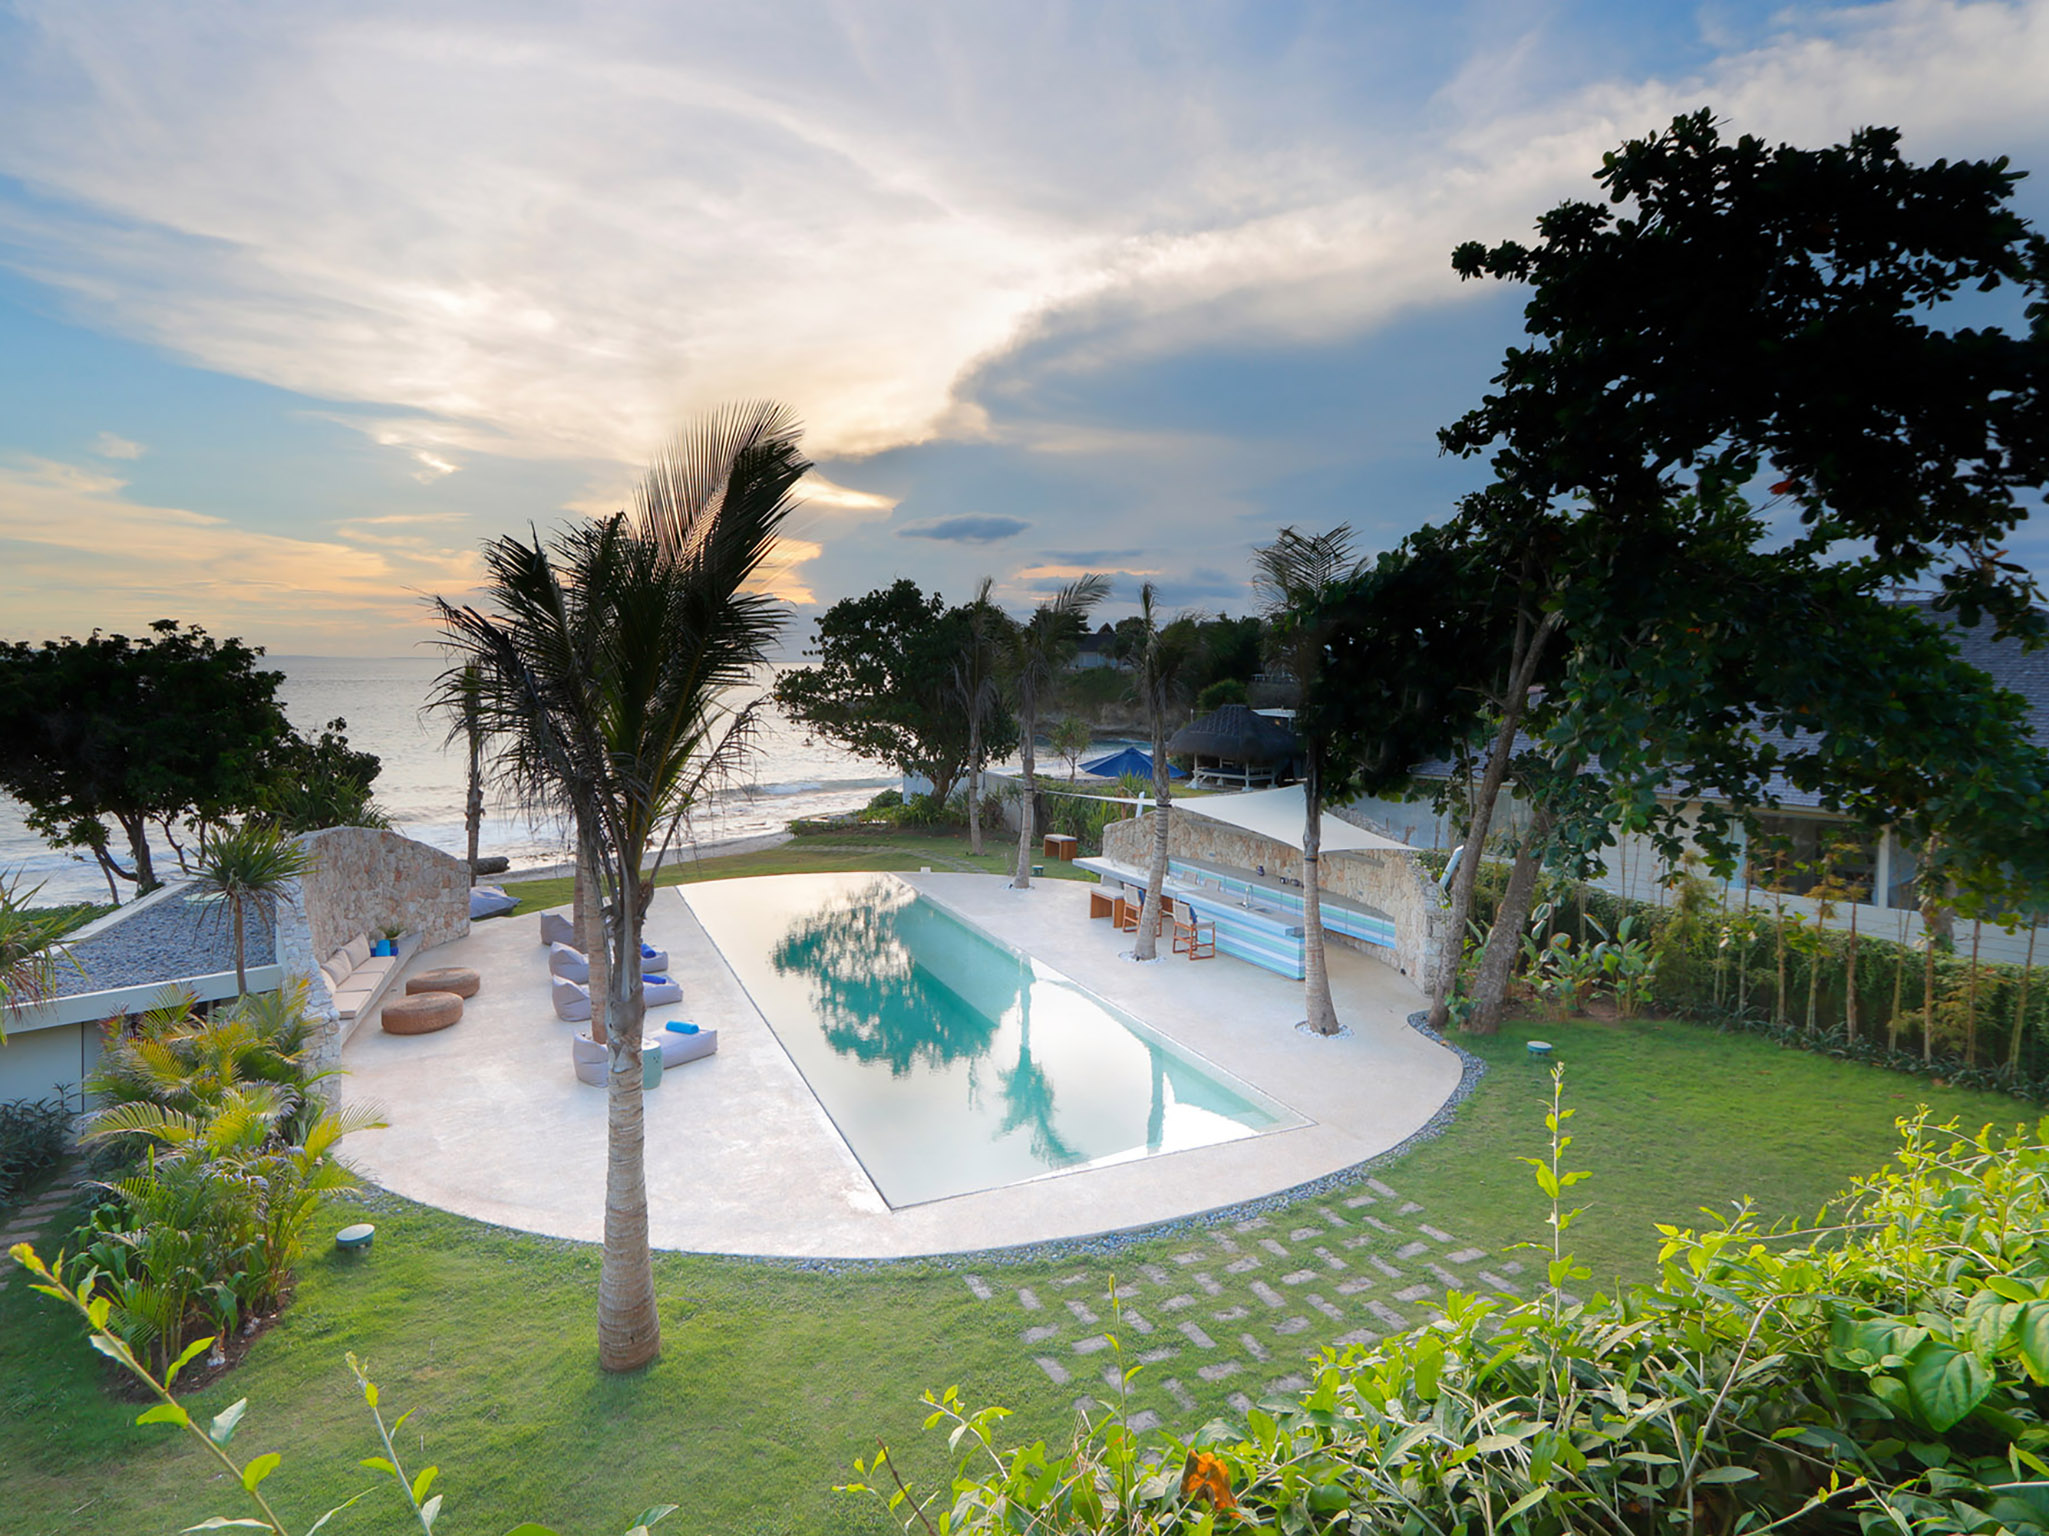 Villa Seascape - Stunning swimming pool setting